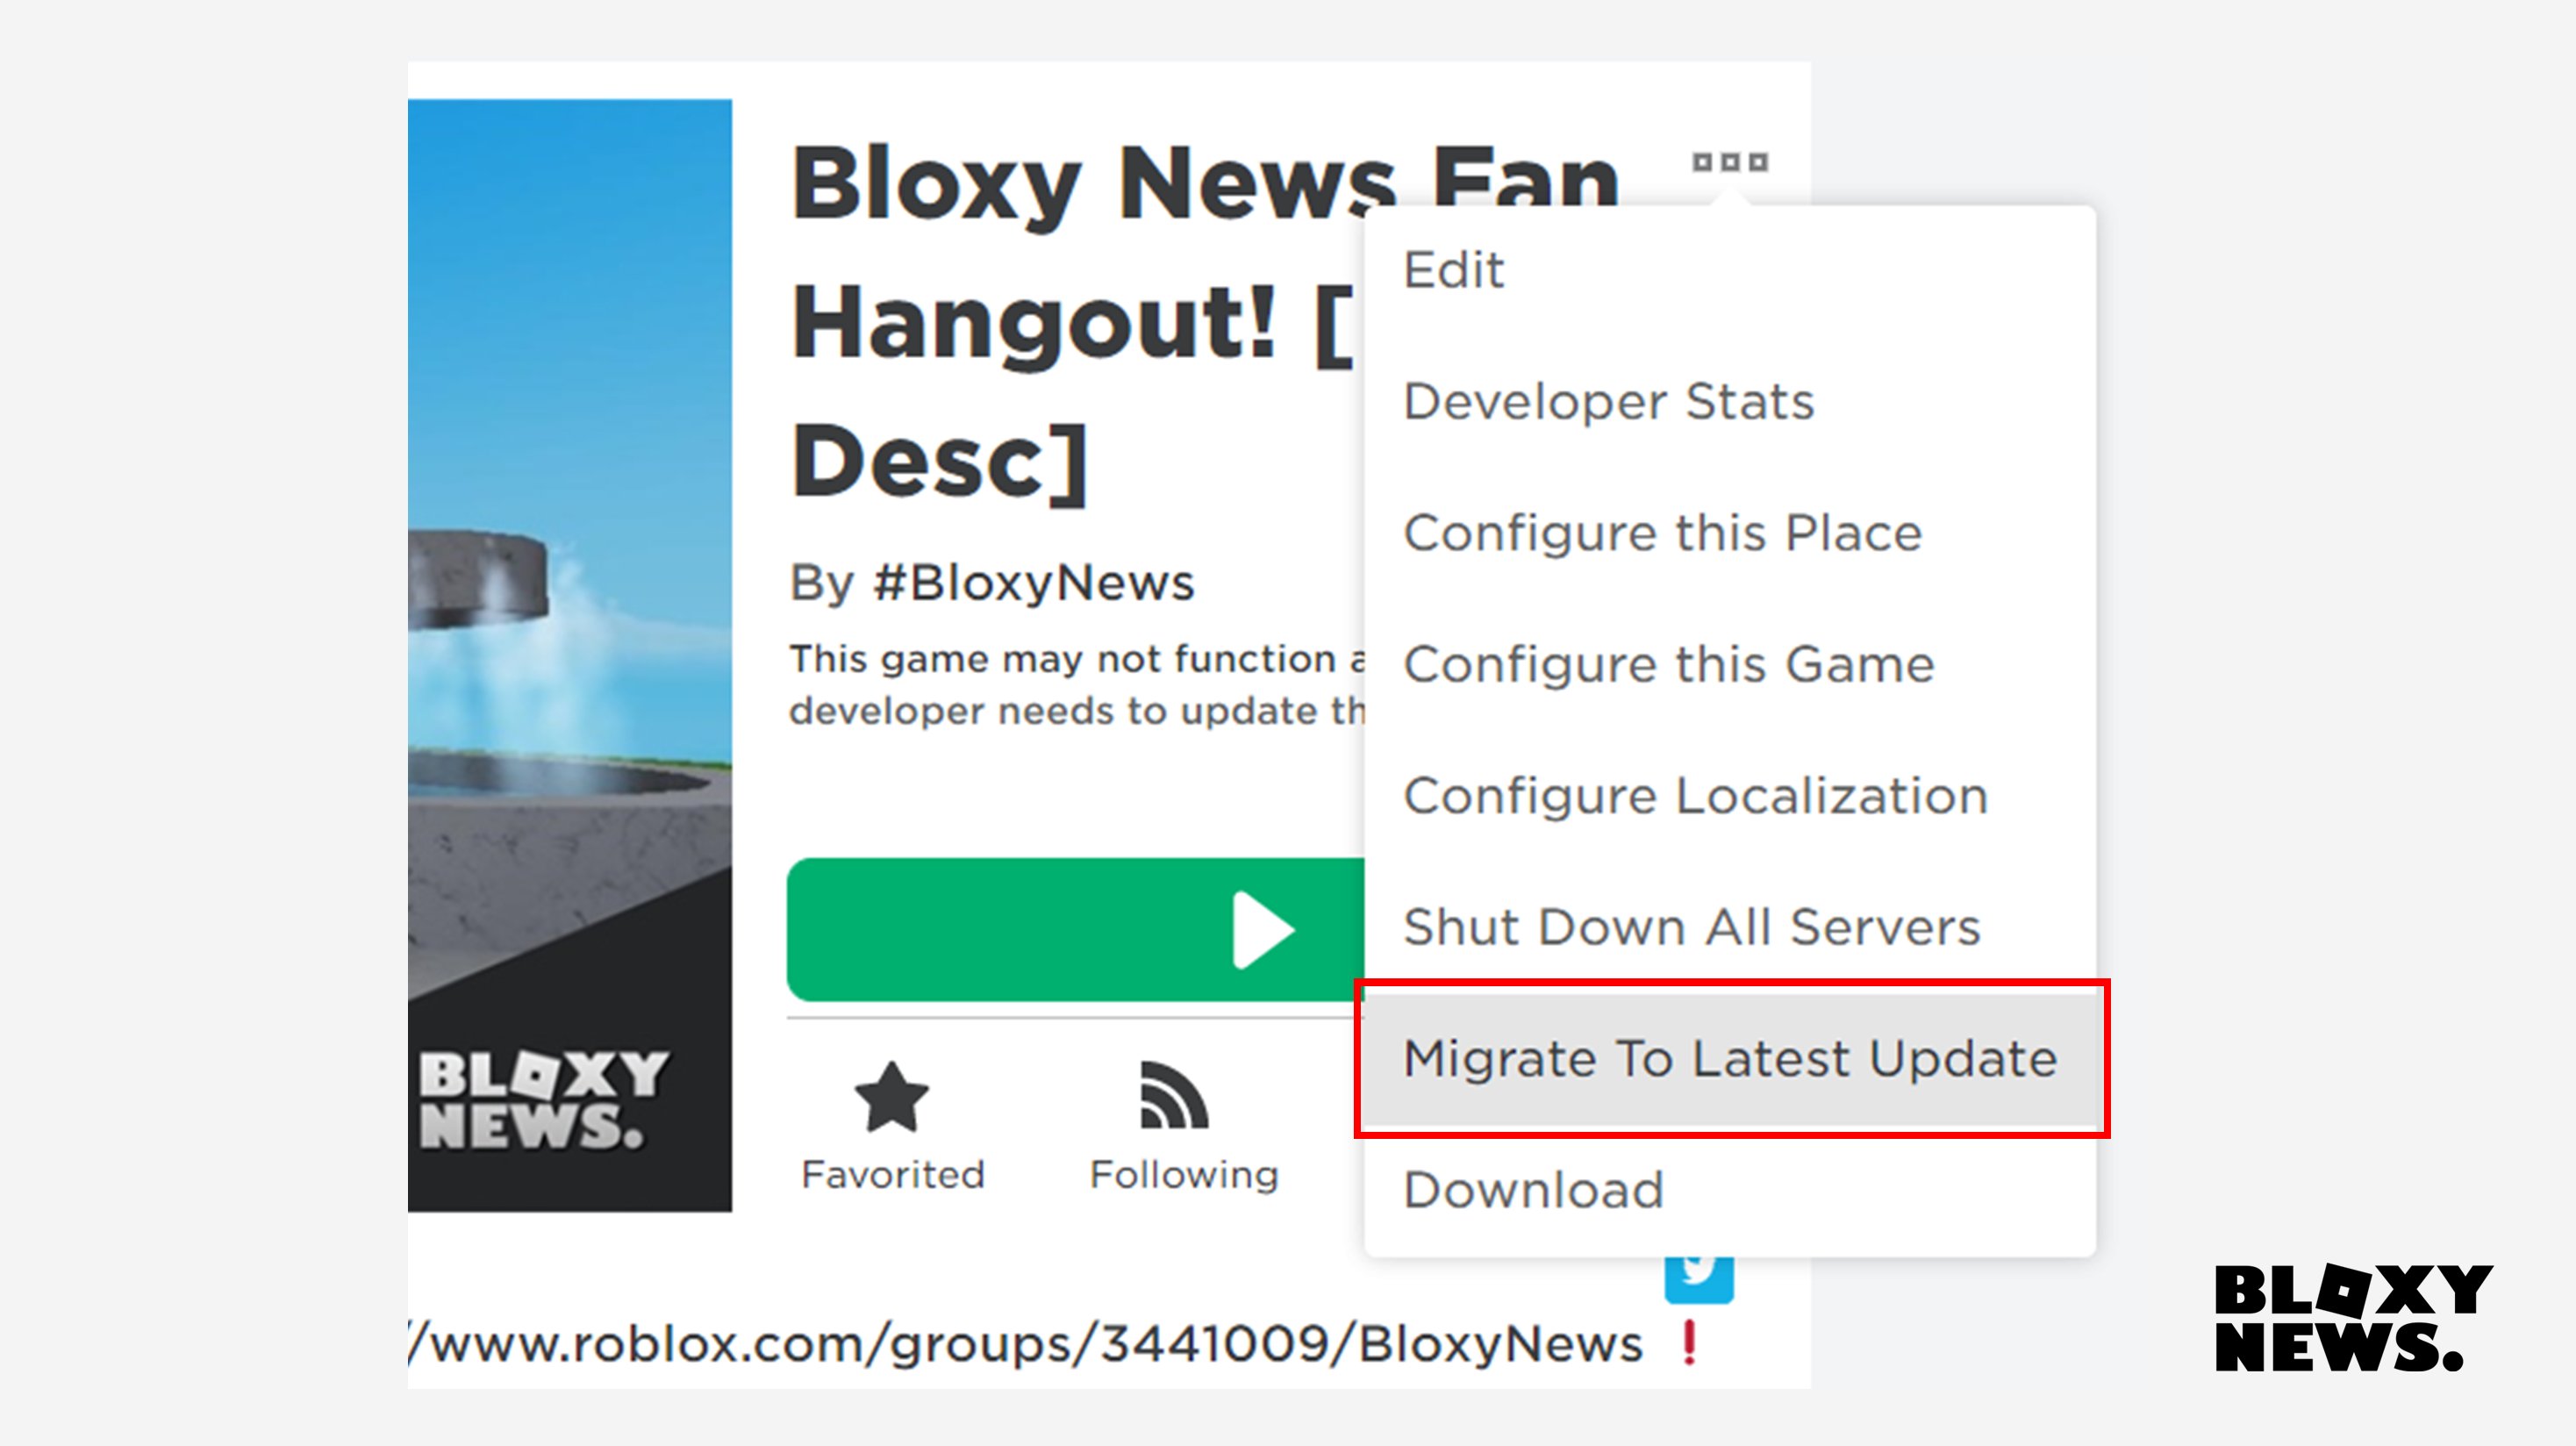 update about Roblox shut down.